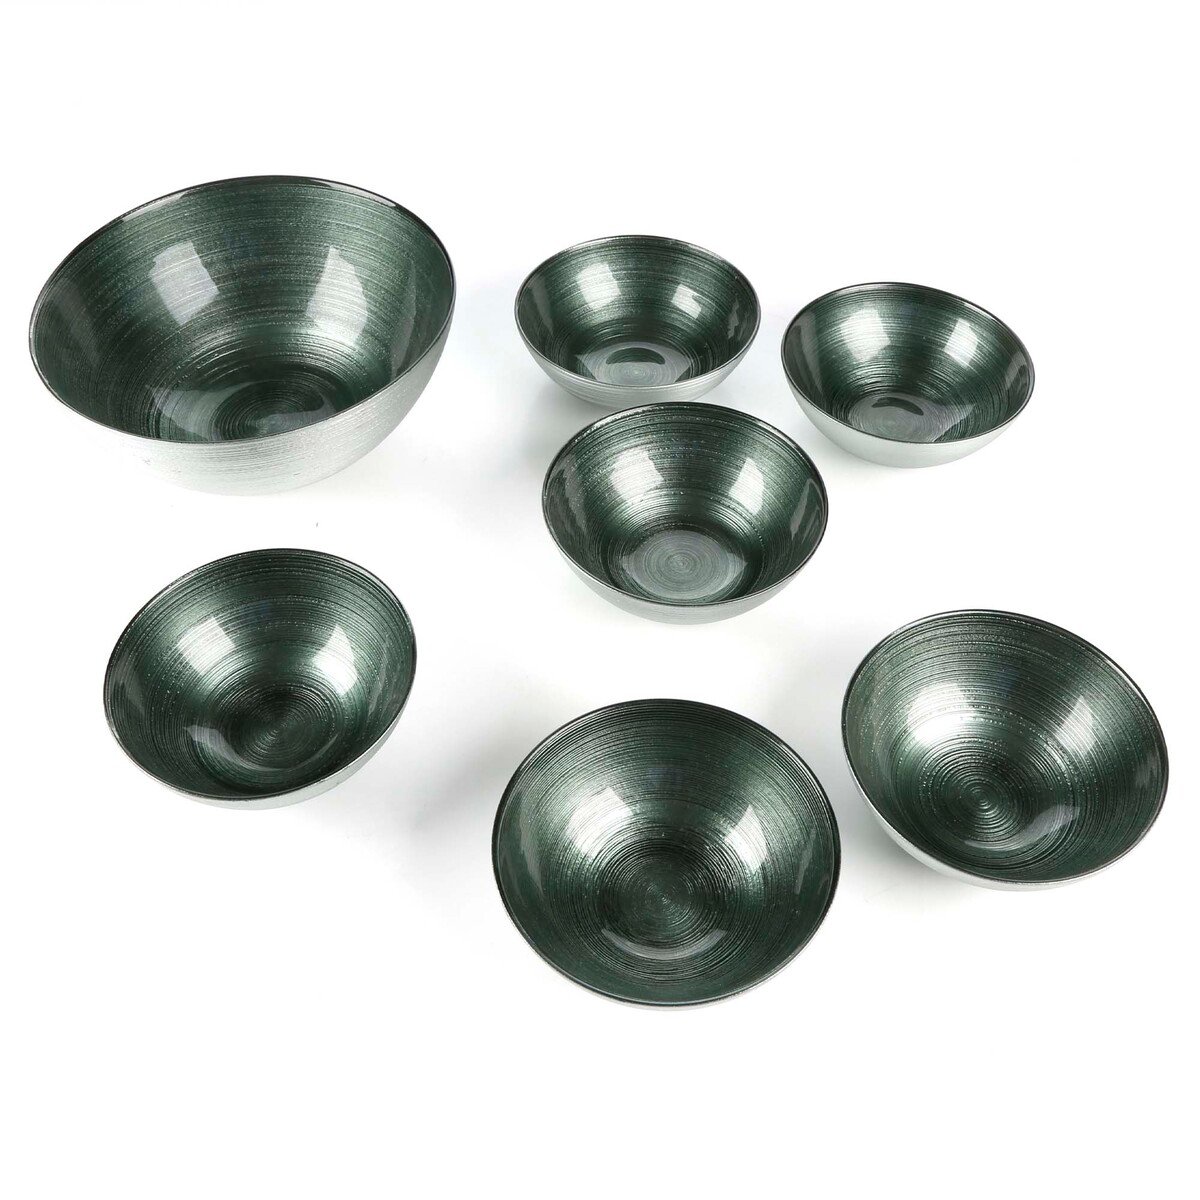 Glascom Decorative Glass Bowls, 7 Pcs, FV08